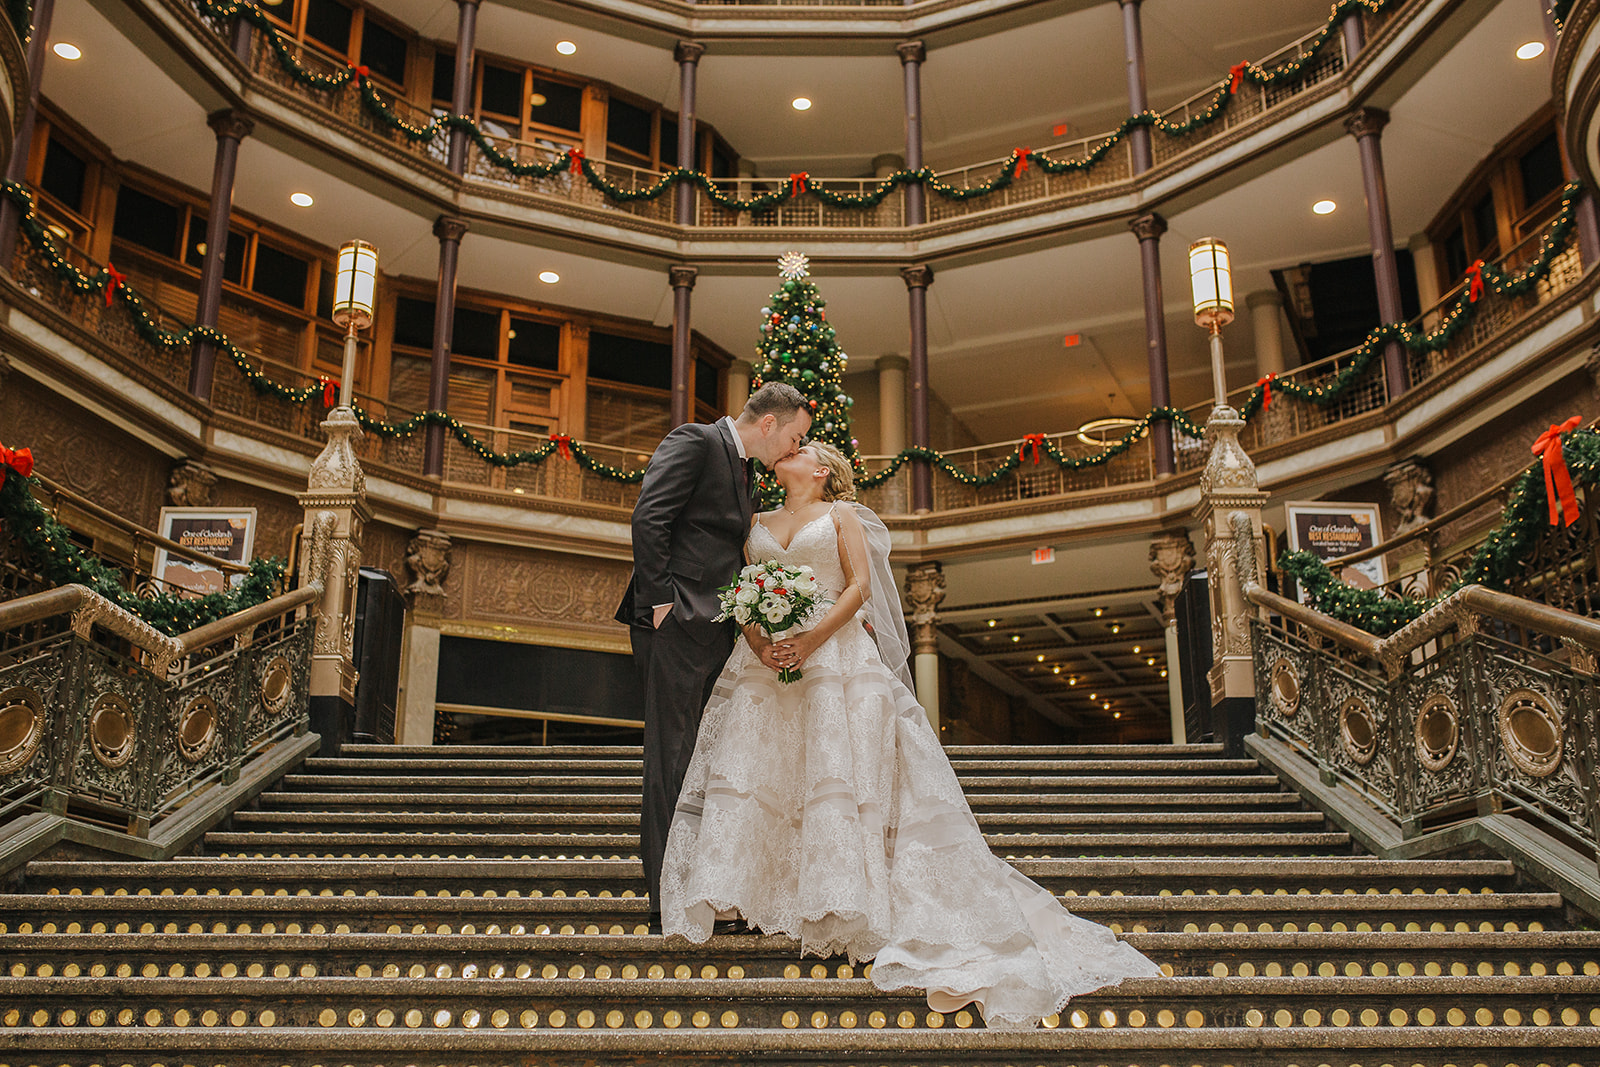 Mr. & Mrs. Lewis - Christmas Themed Wedding - The Hyatt Regency Cleveland at the Arcade